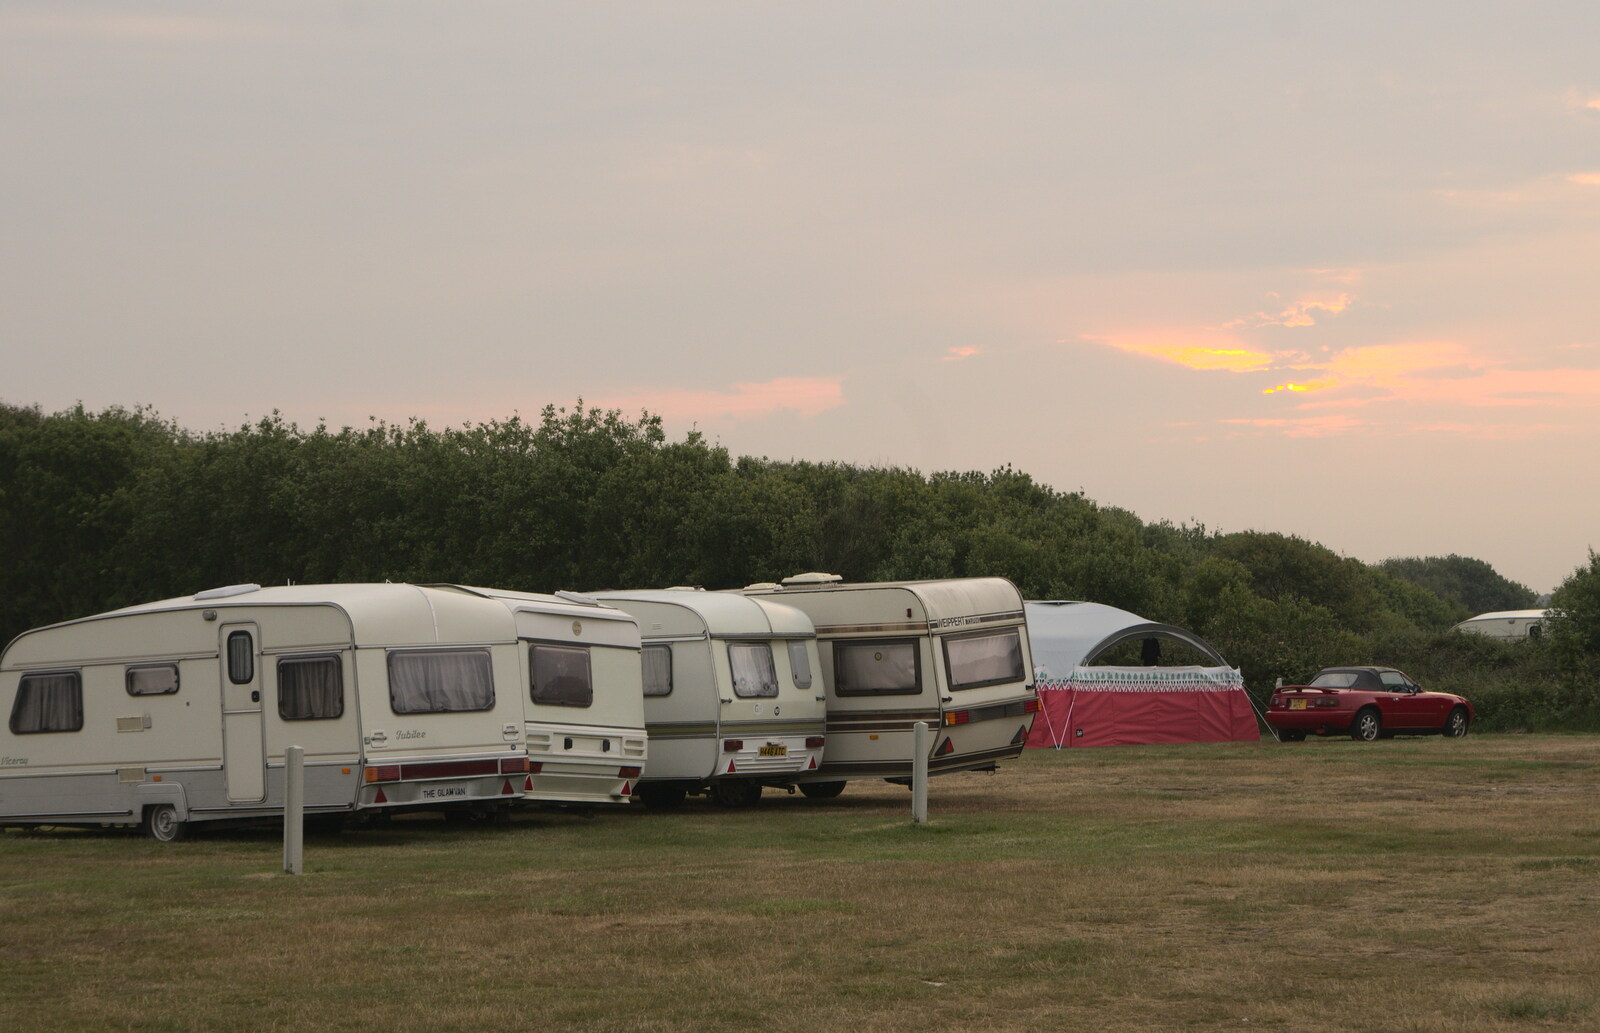 A random stack of caravans from A Wet Weekend of Camping, Waxham Sands, Norfolk - 13th June 2015